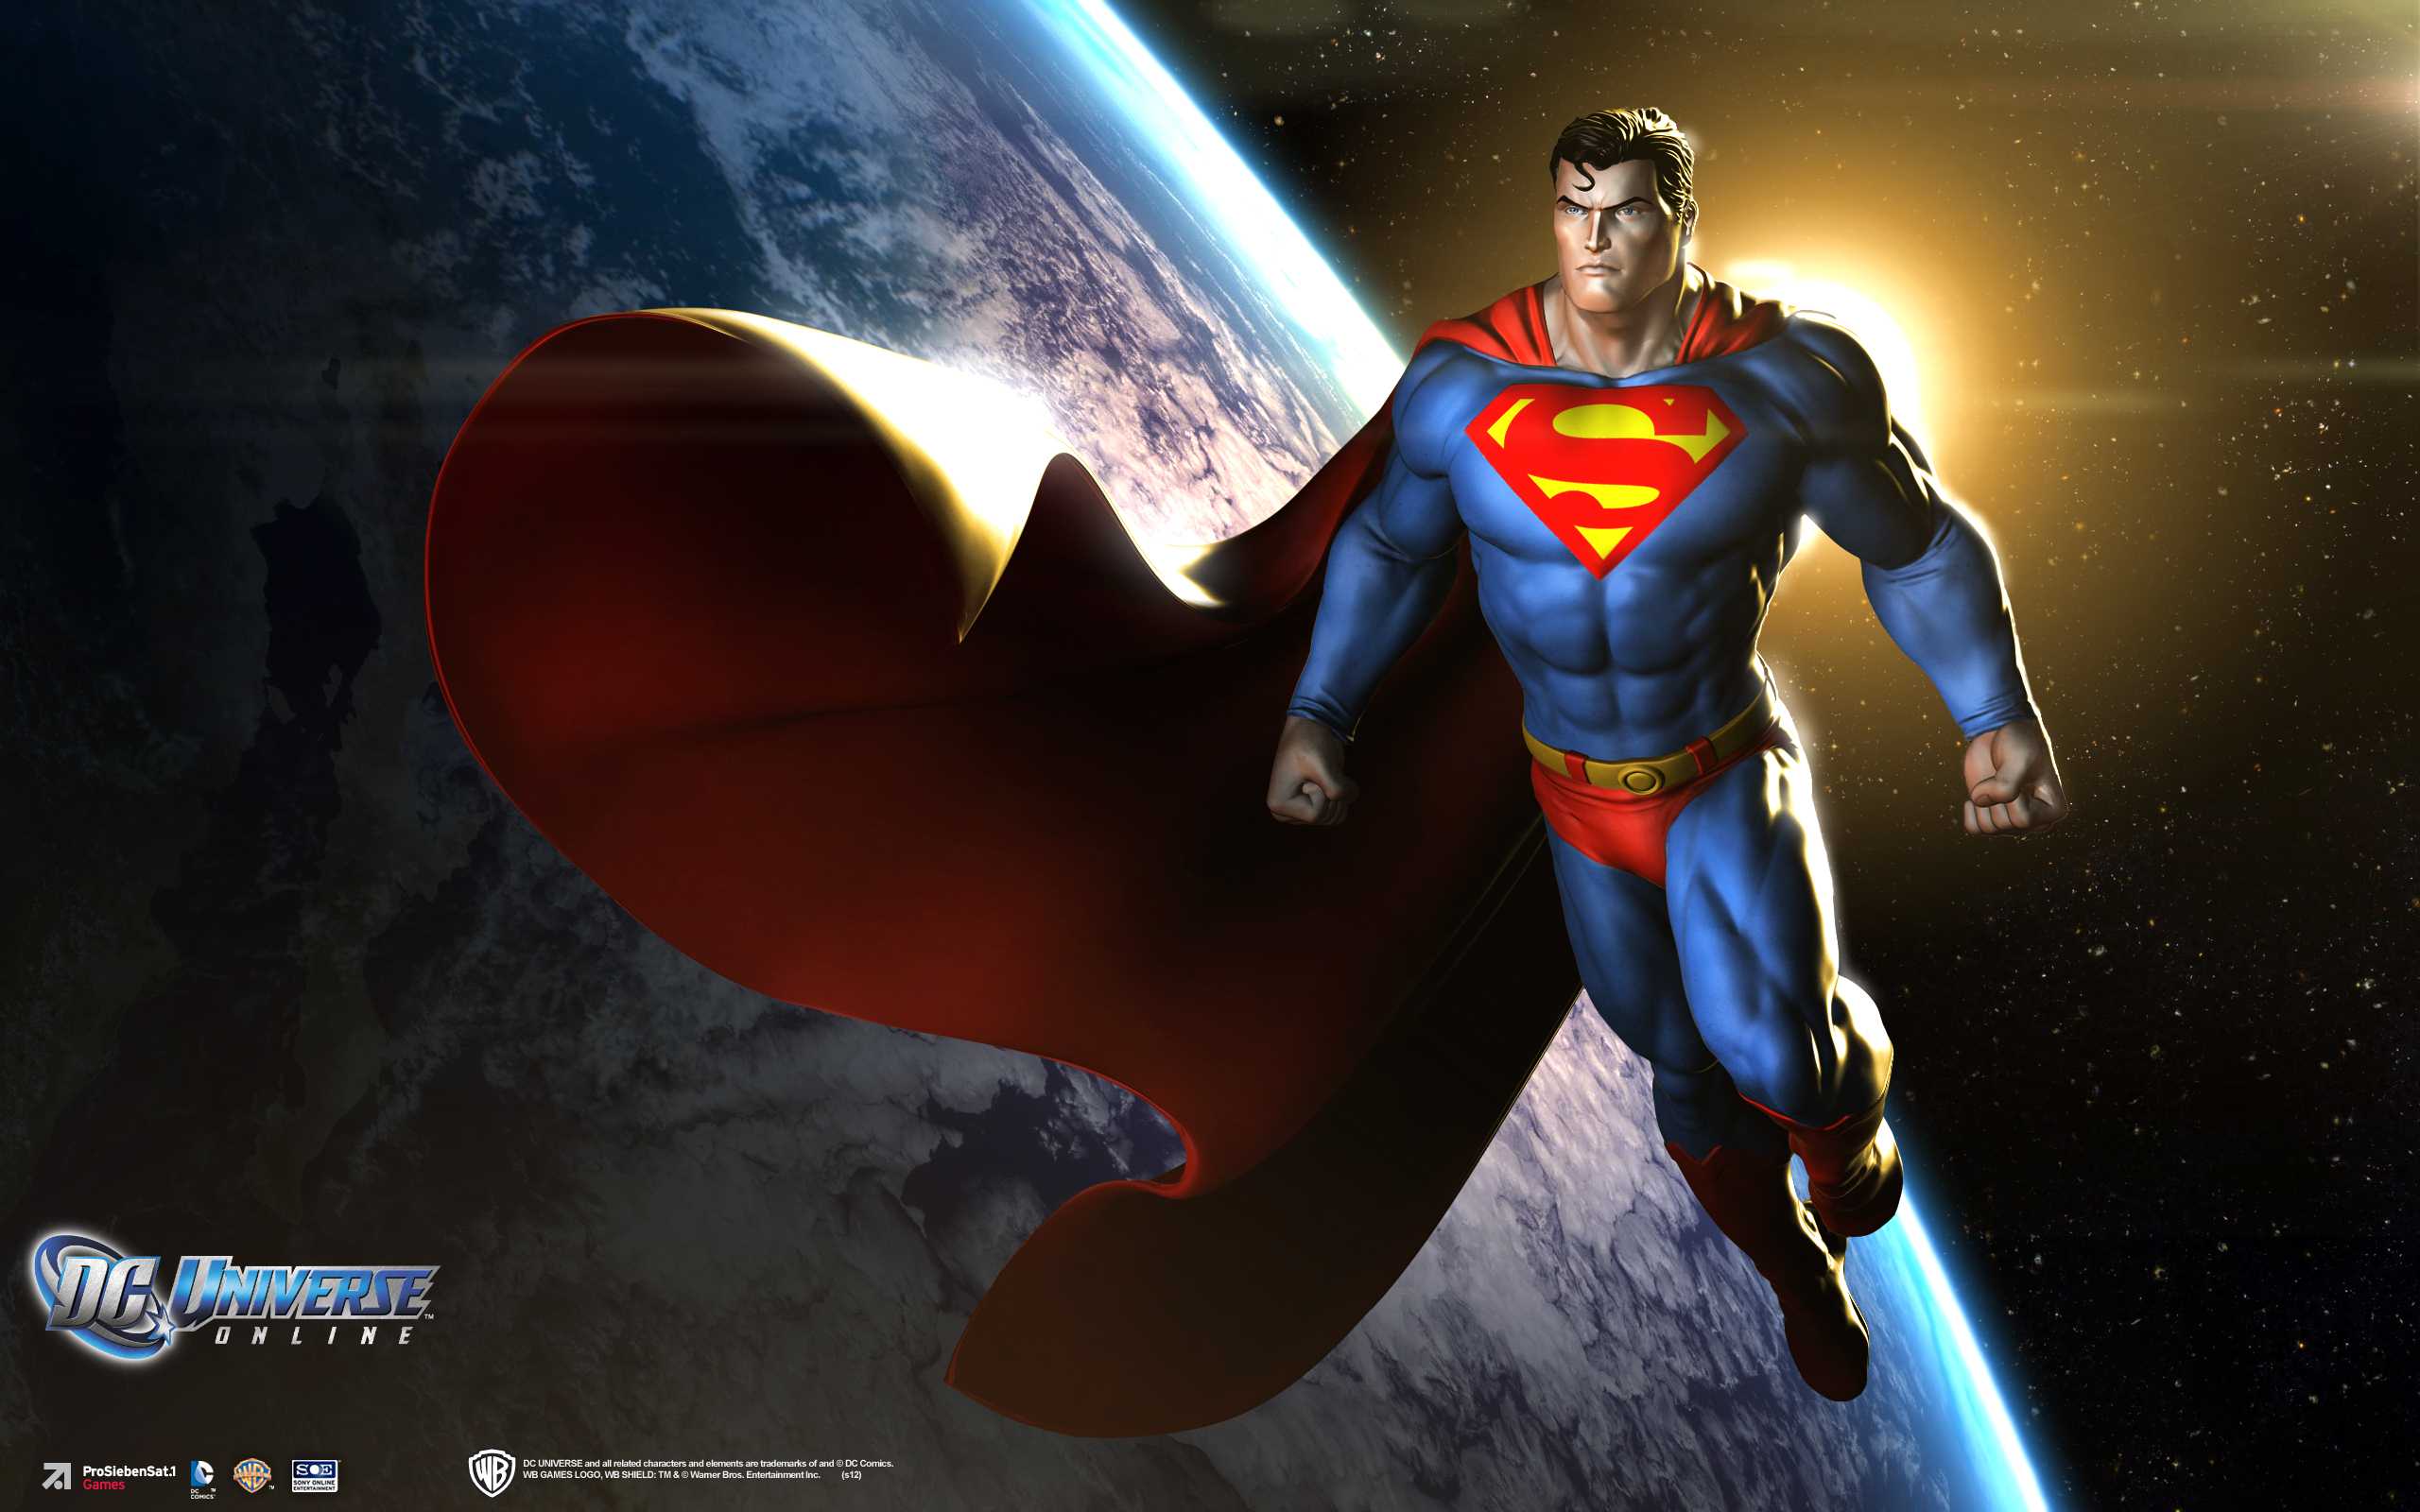 Superman Wallpaper HD Best Collection For Desktop, Mobile